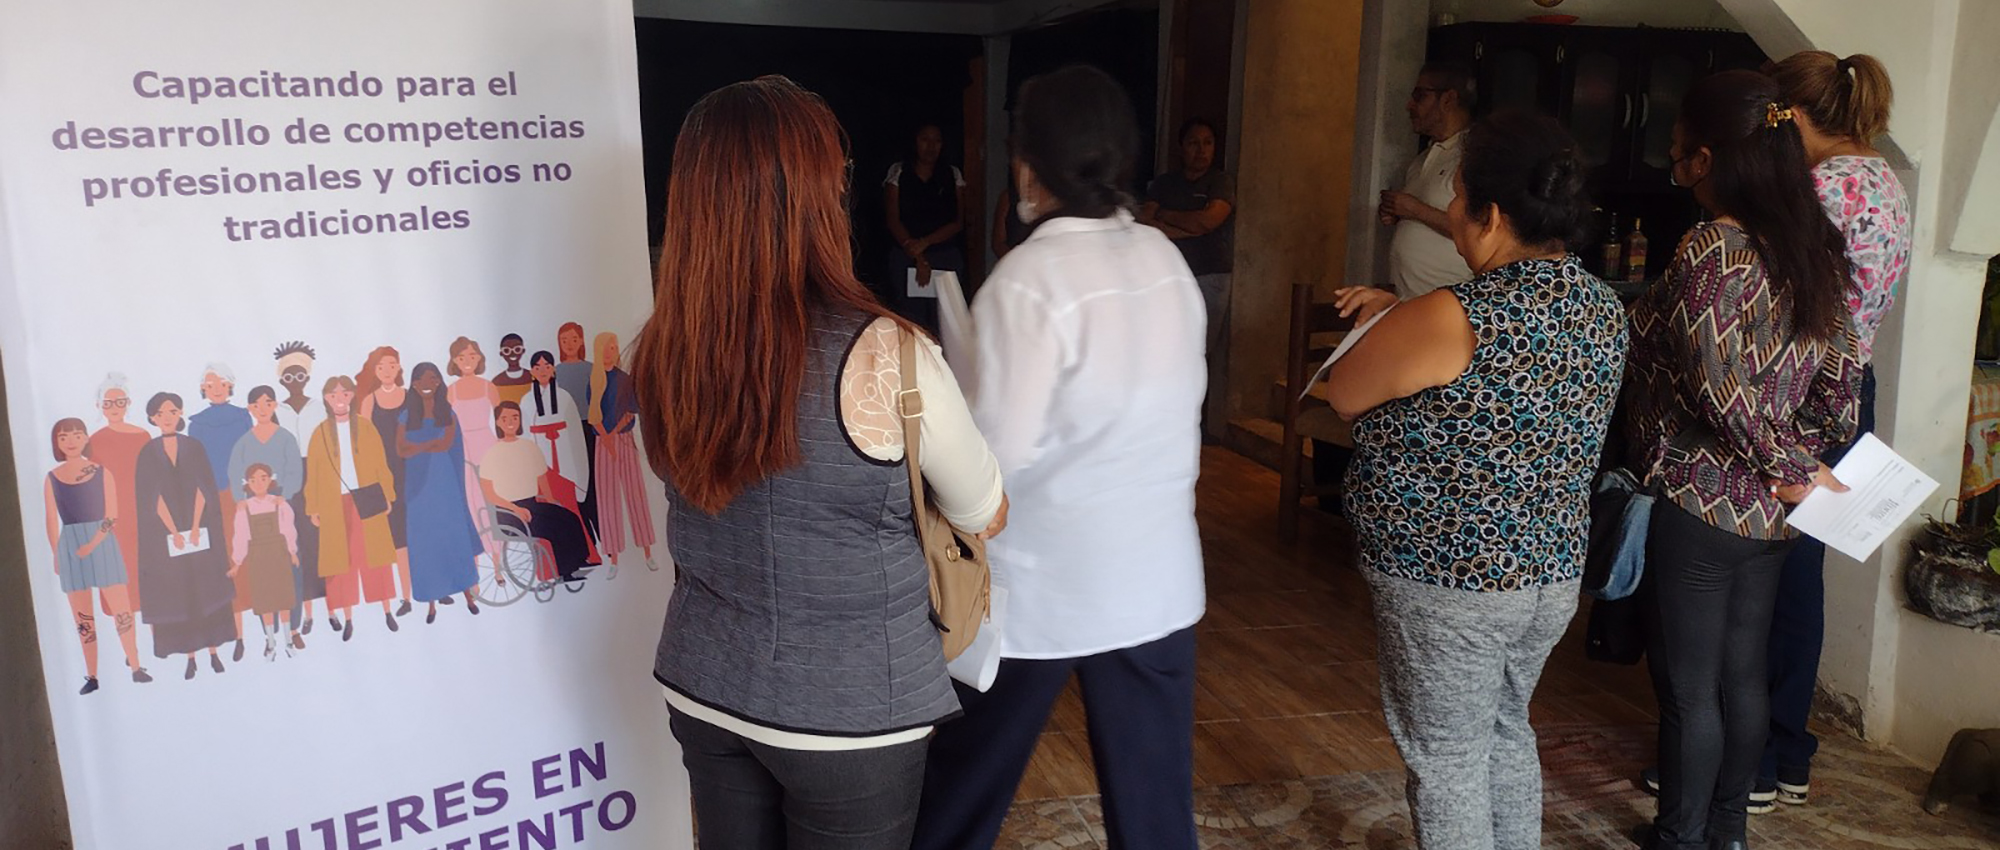 IFM-Investors-Community-Grants-Program-helps-at-risk-women-in-Ecatepec-Mexico-HERO.jpeg